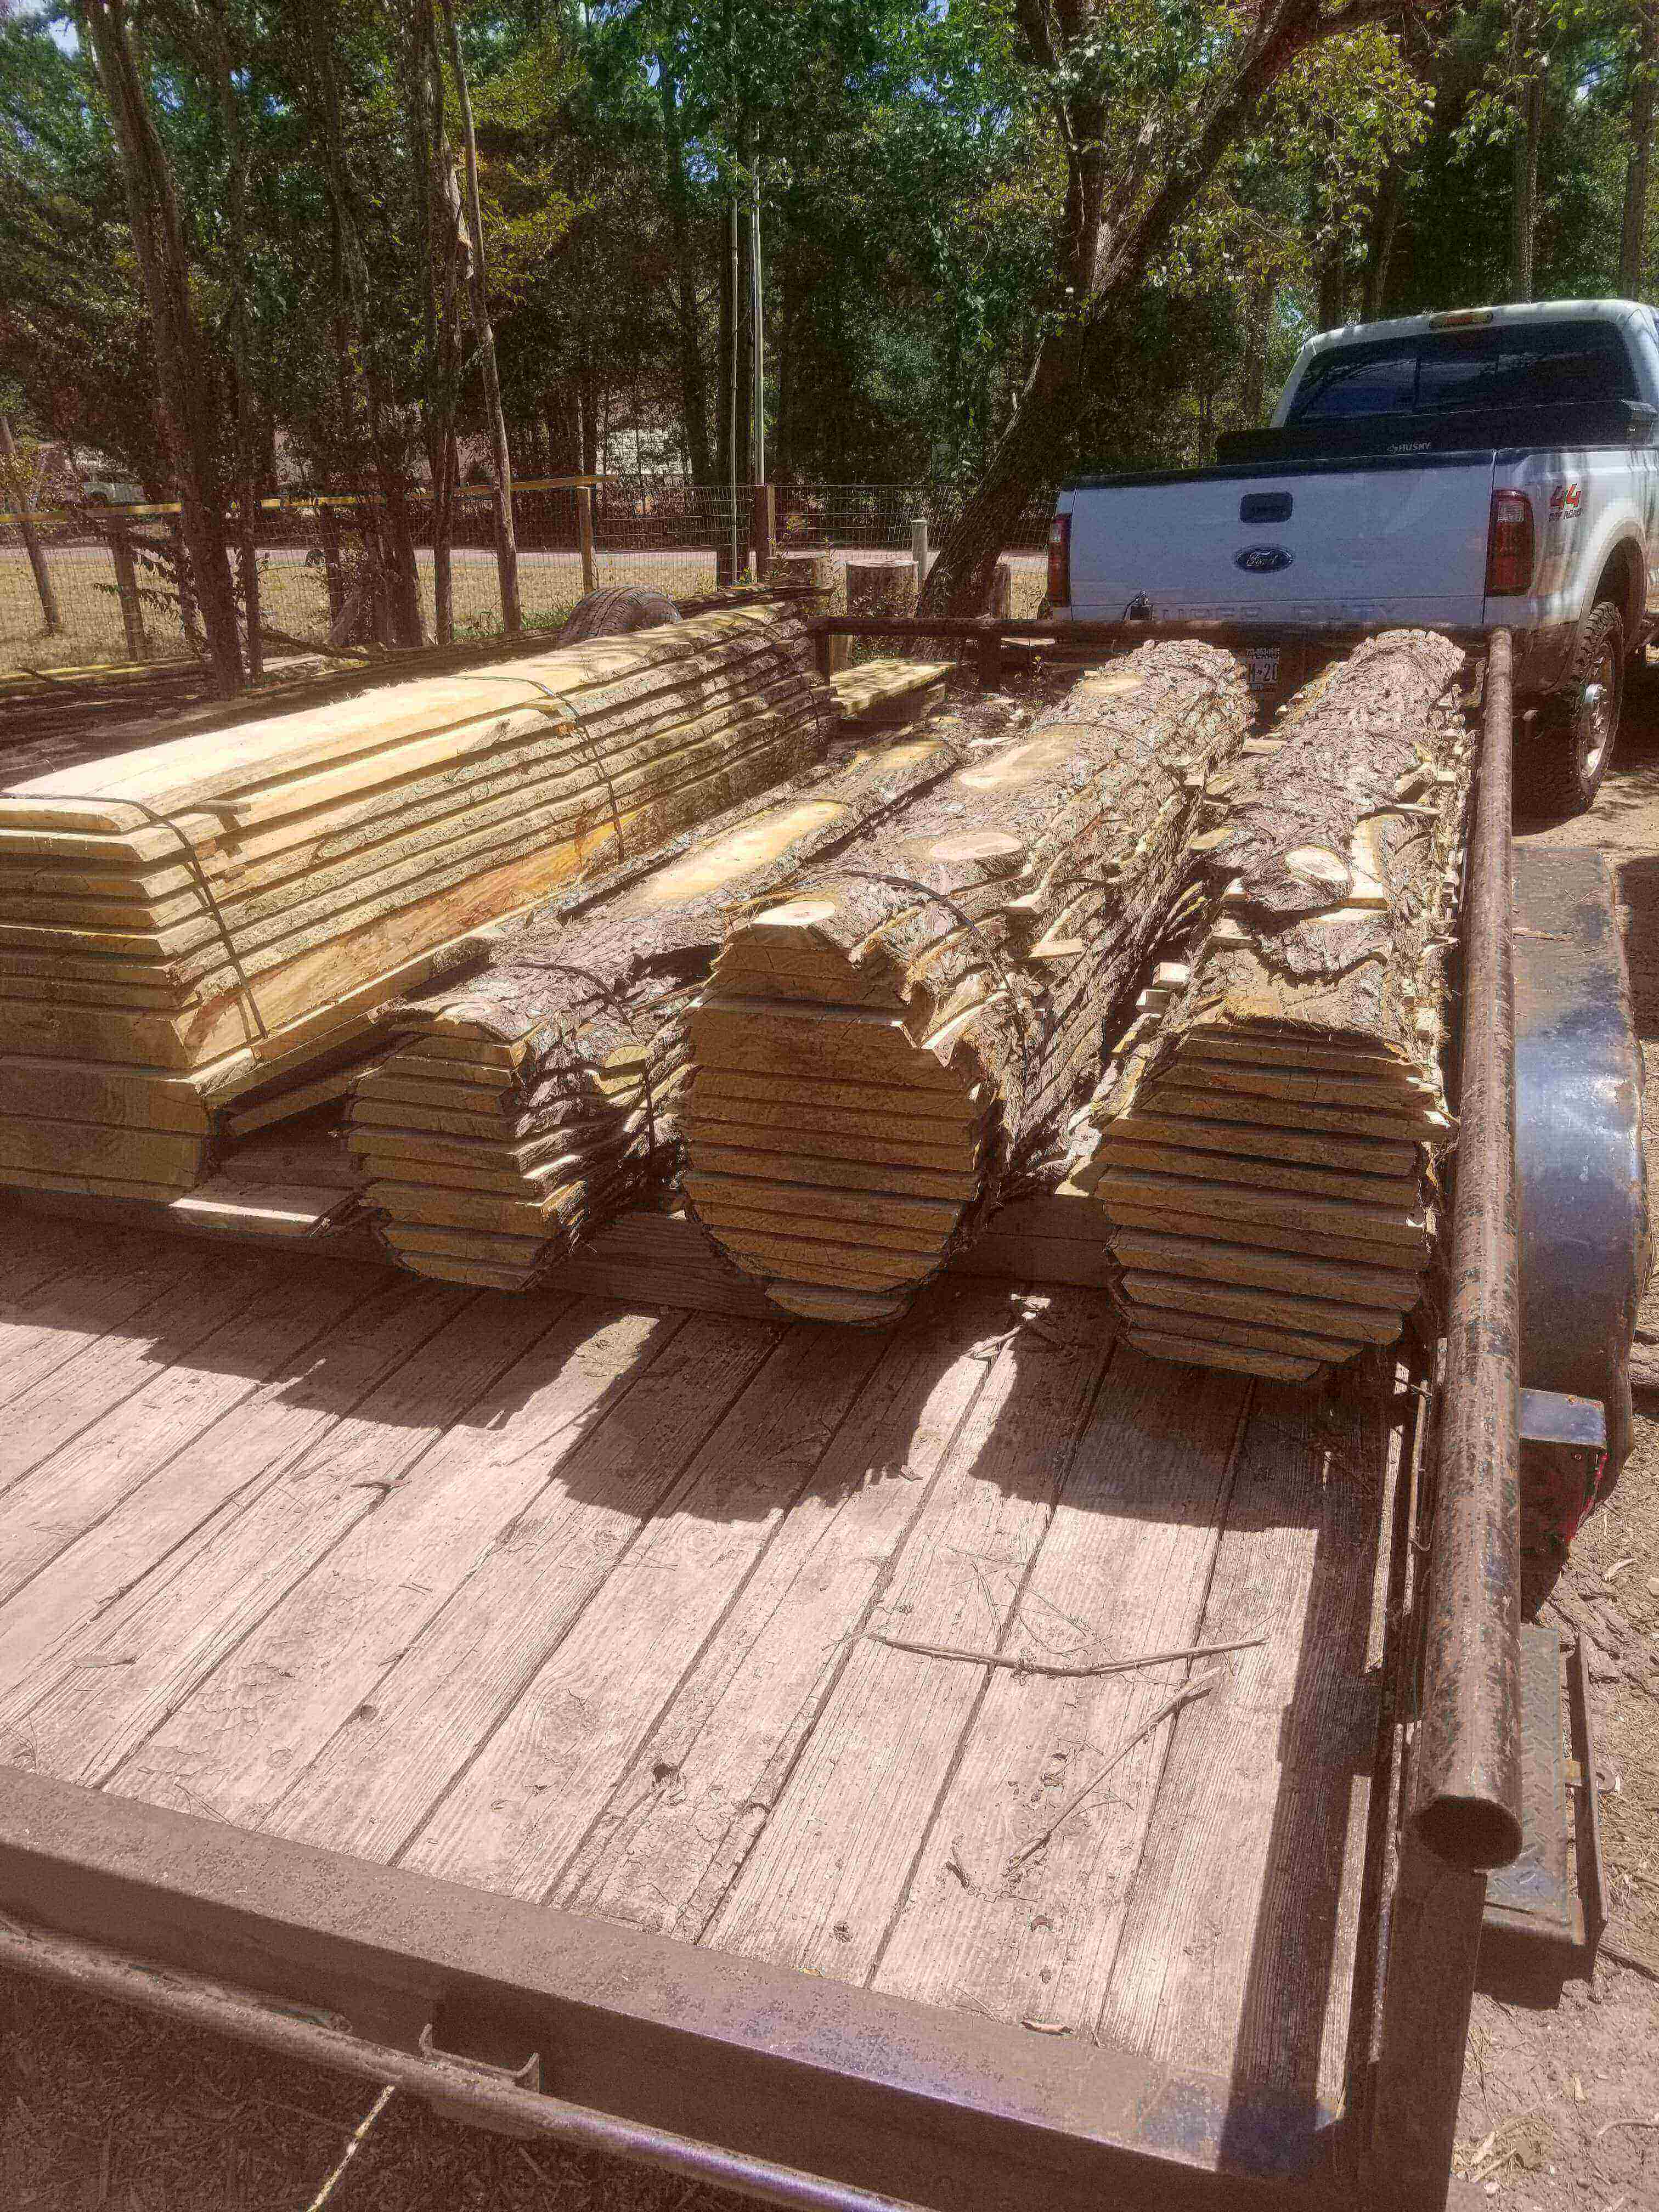 Wood loaded onto trailer